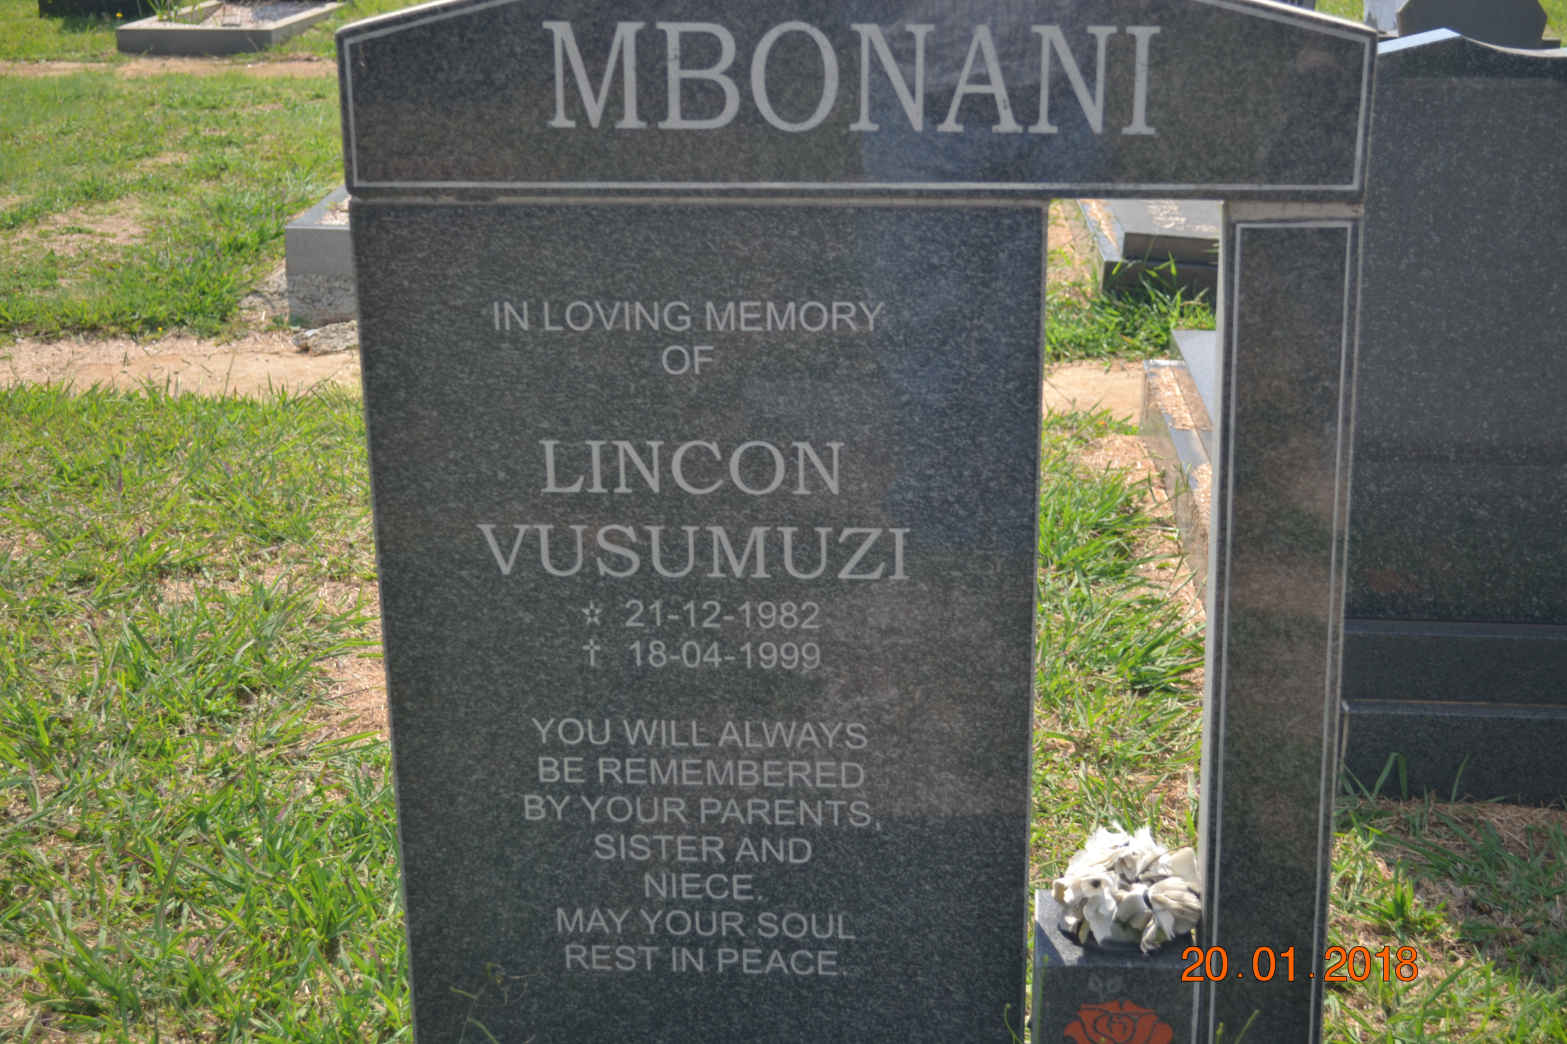 MBONANI Lincon Vusumuzi 1982-1999